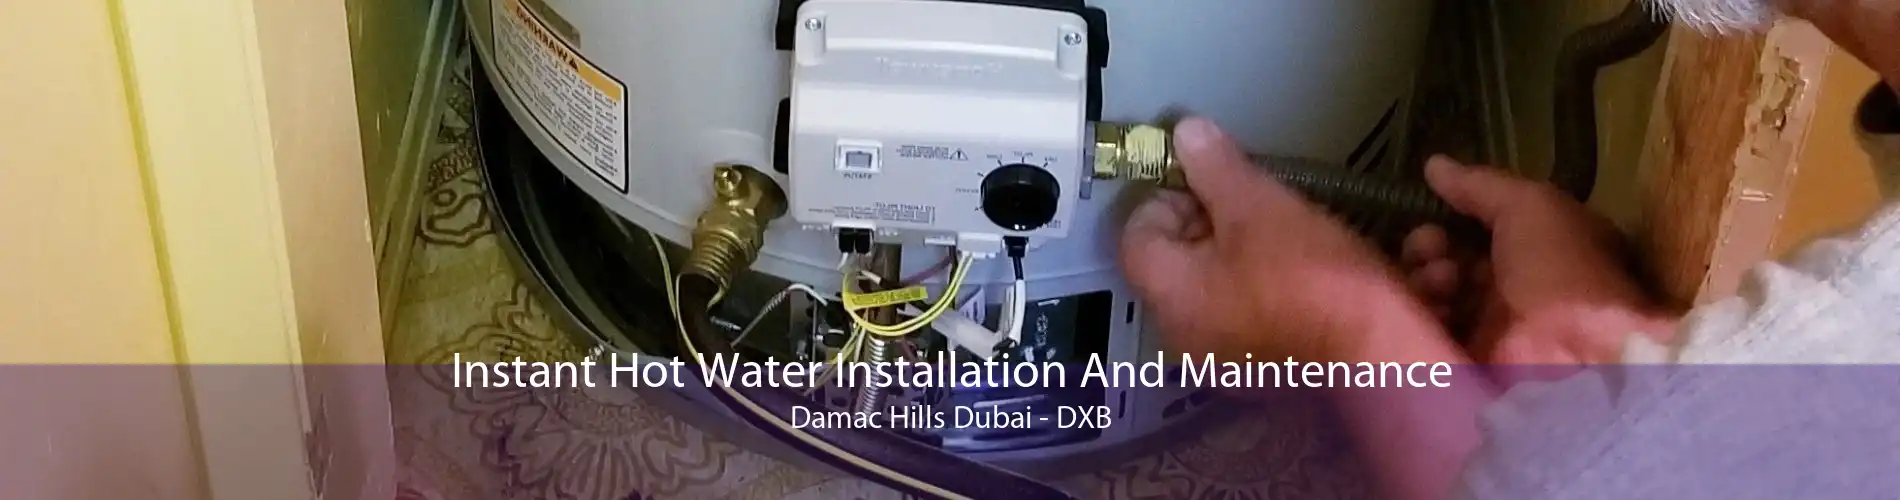 Instant Hot Water Installation And Maintenance Damac Hills Dubai - DXB